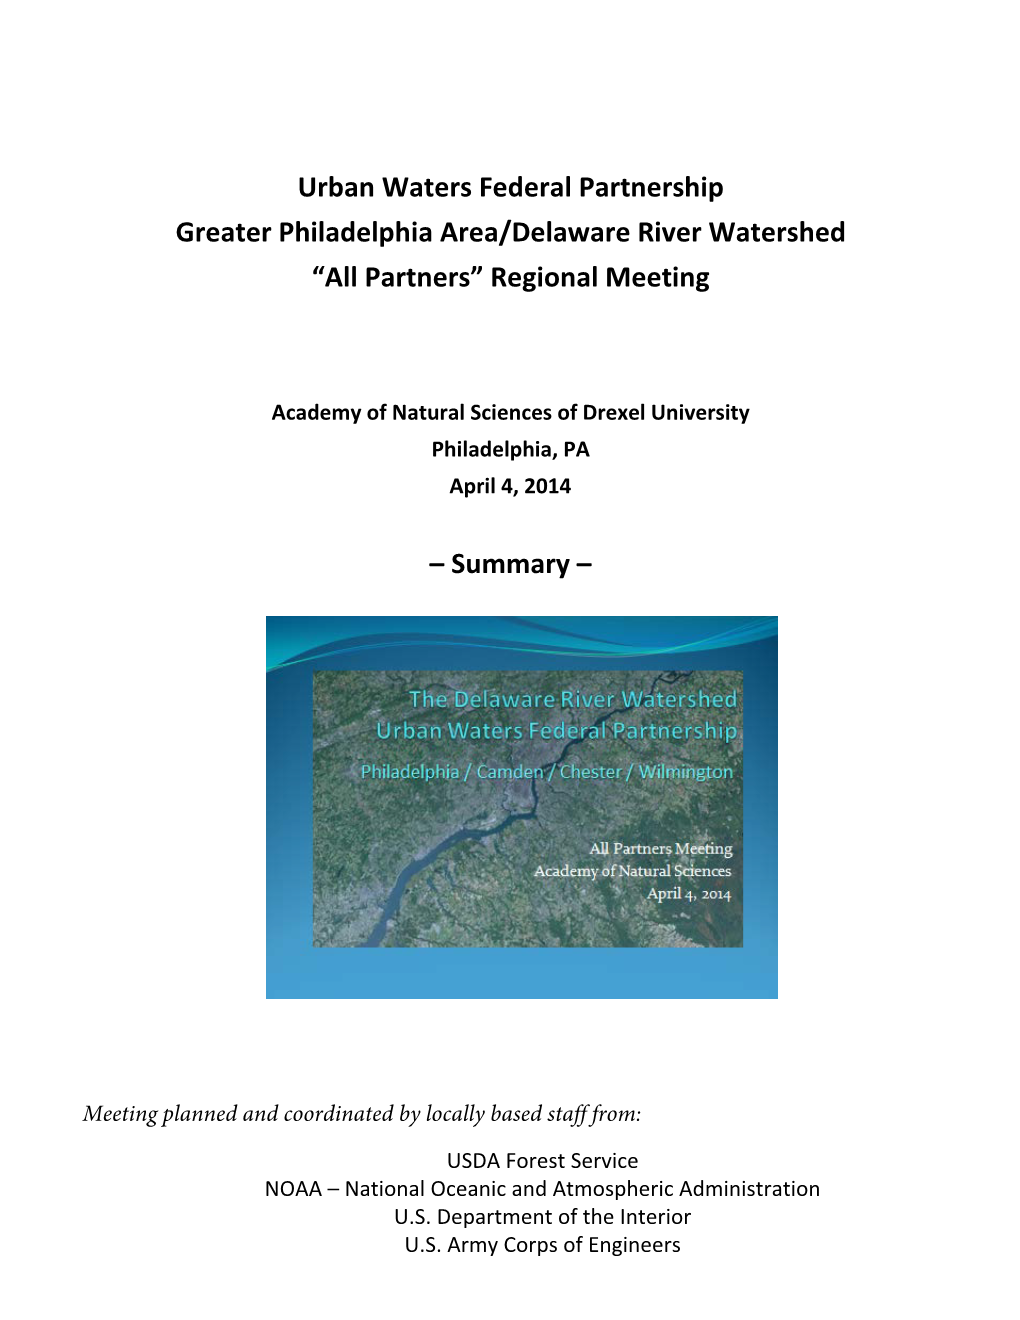 Urban Waters Federal Partnership Greater Philadelphia Area/Delaware River Watershed “All Partners” Regional Meeting